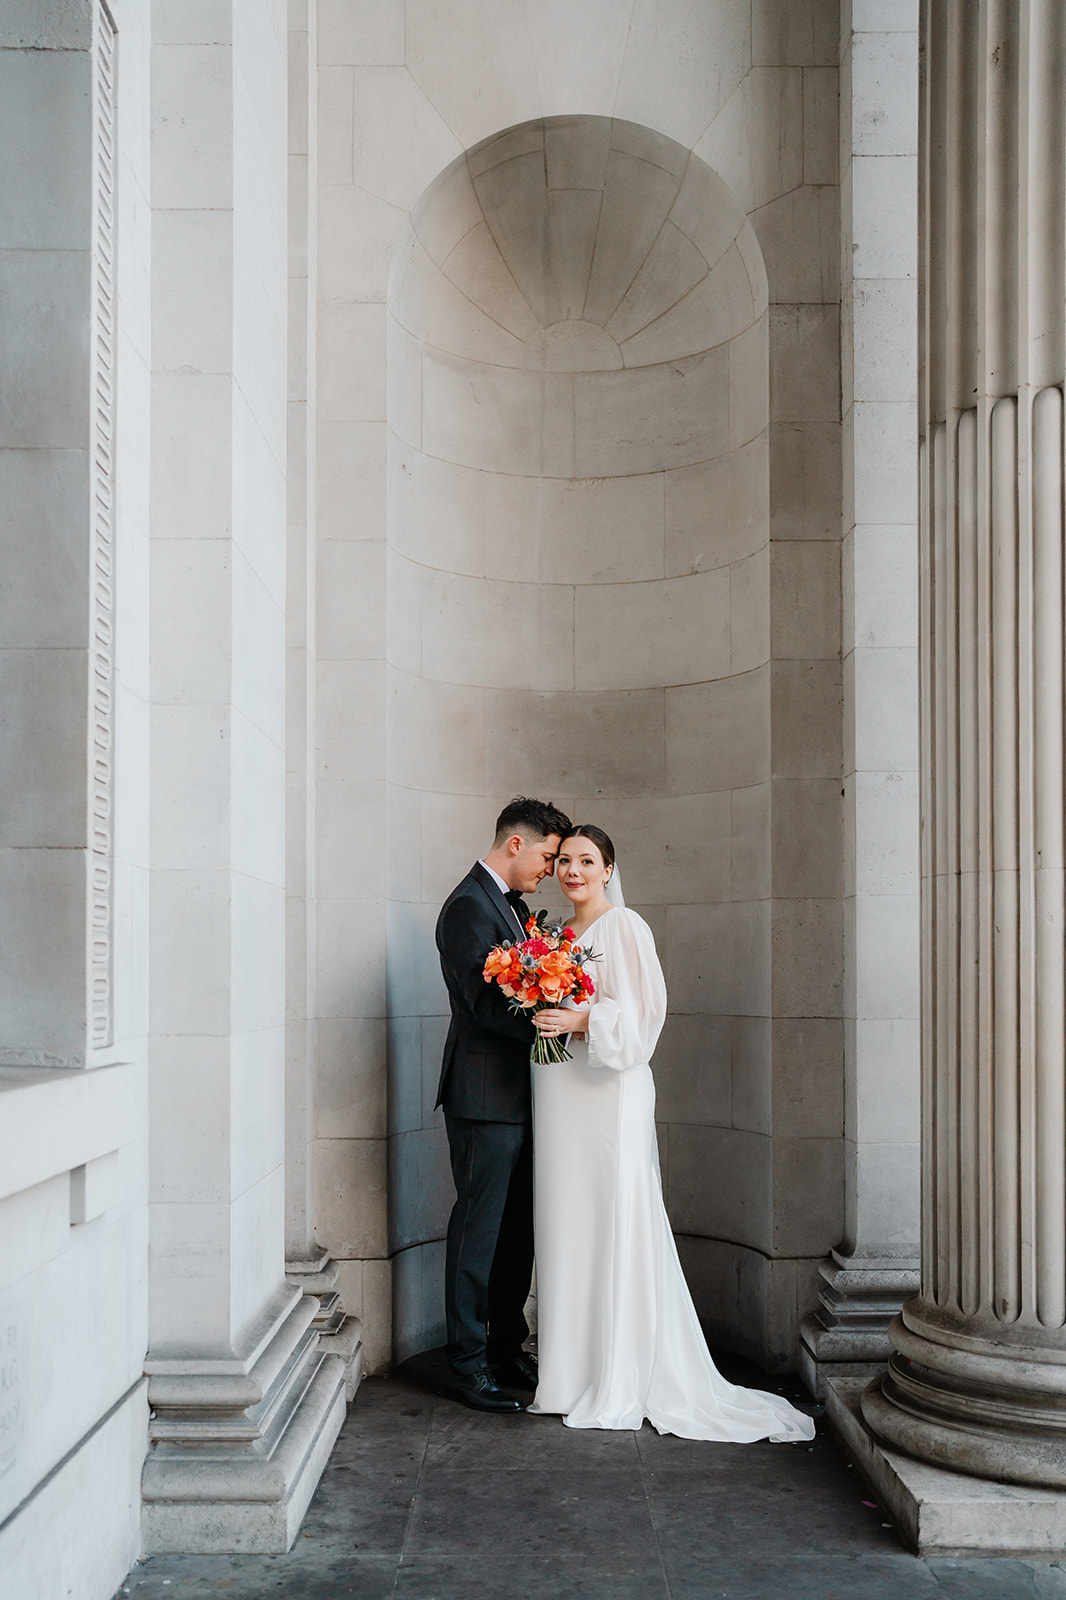 Editorial Wedding Photography at Old Marylebone Town Hall | London Wedding Photographer